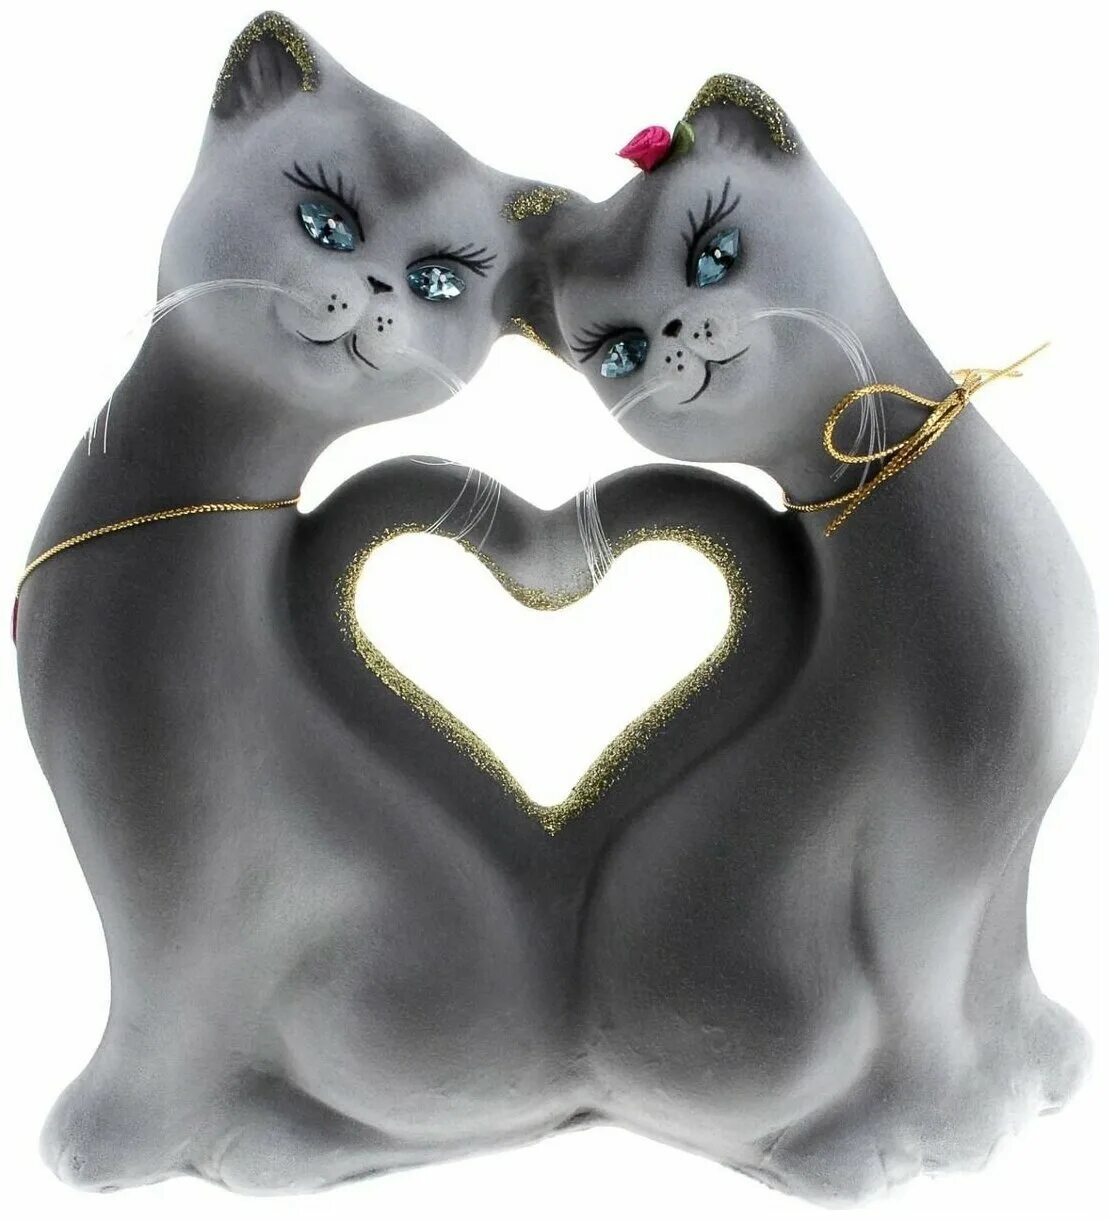 Котики в форме сердца. Статуэтка кота с сердечком. Котики в форме сердечка. Кошечки 9